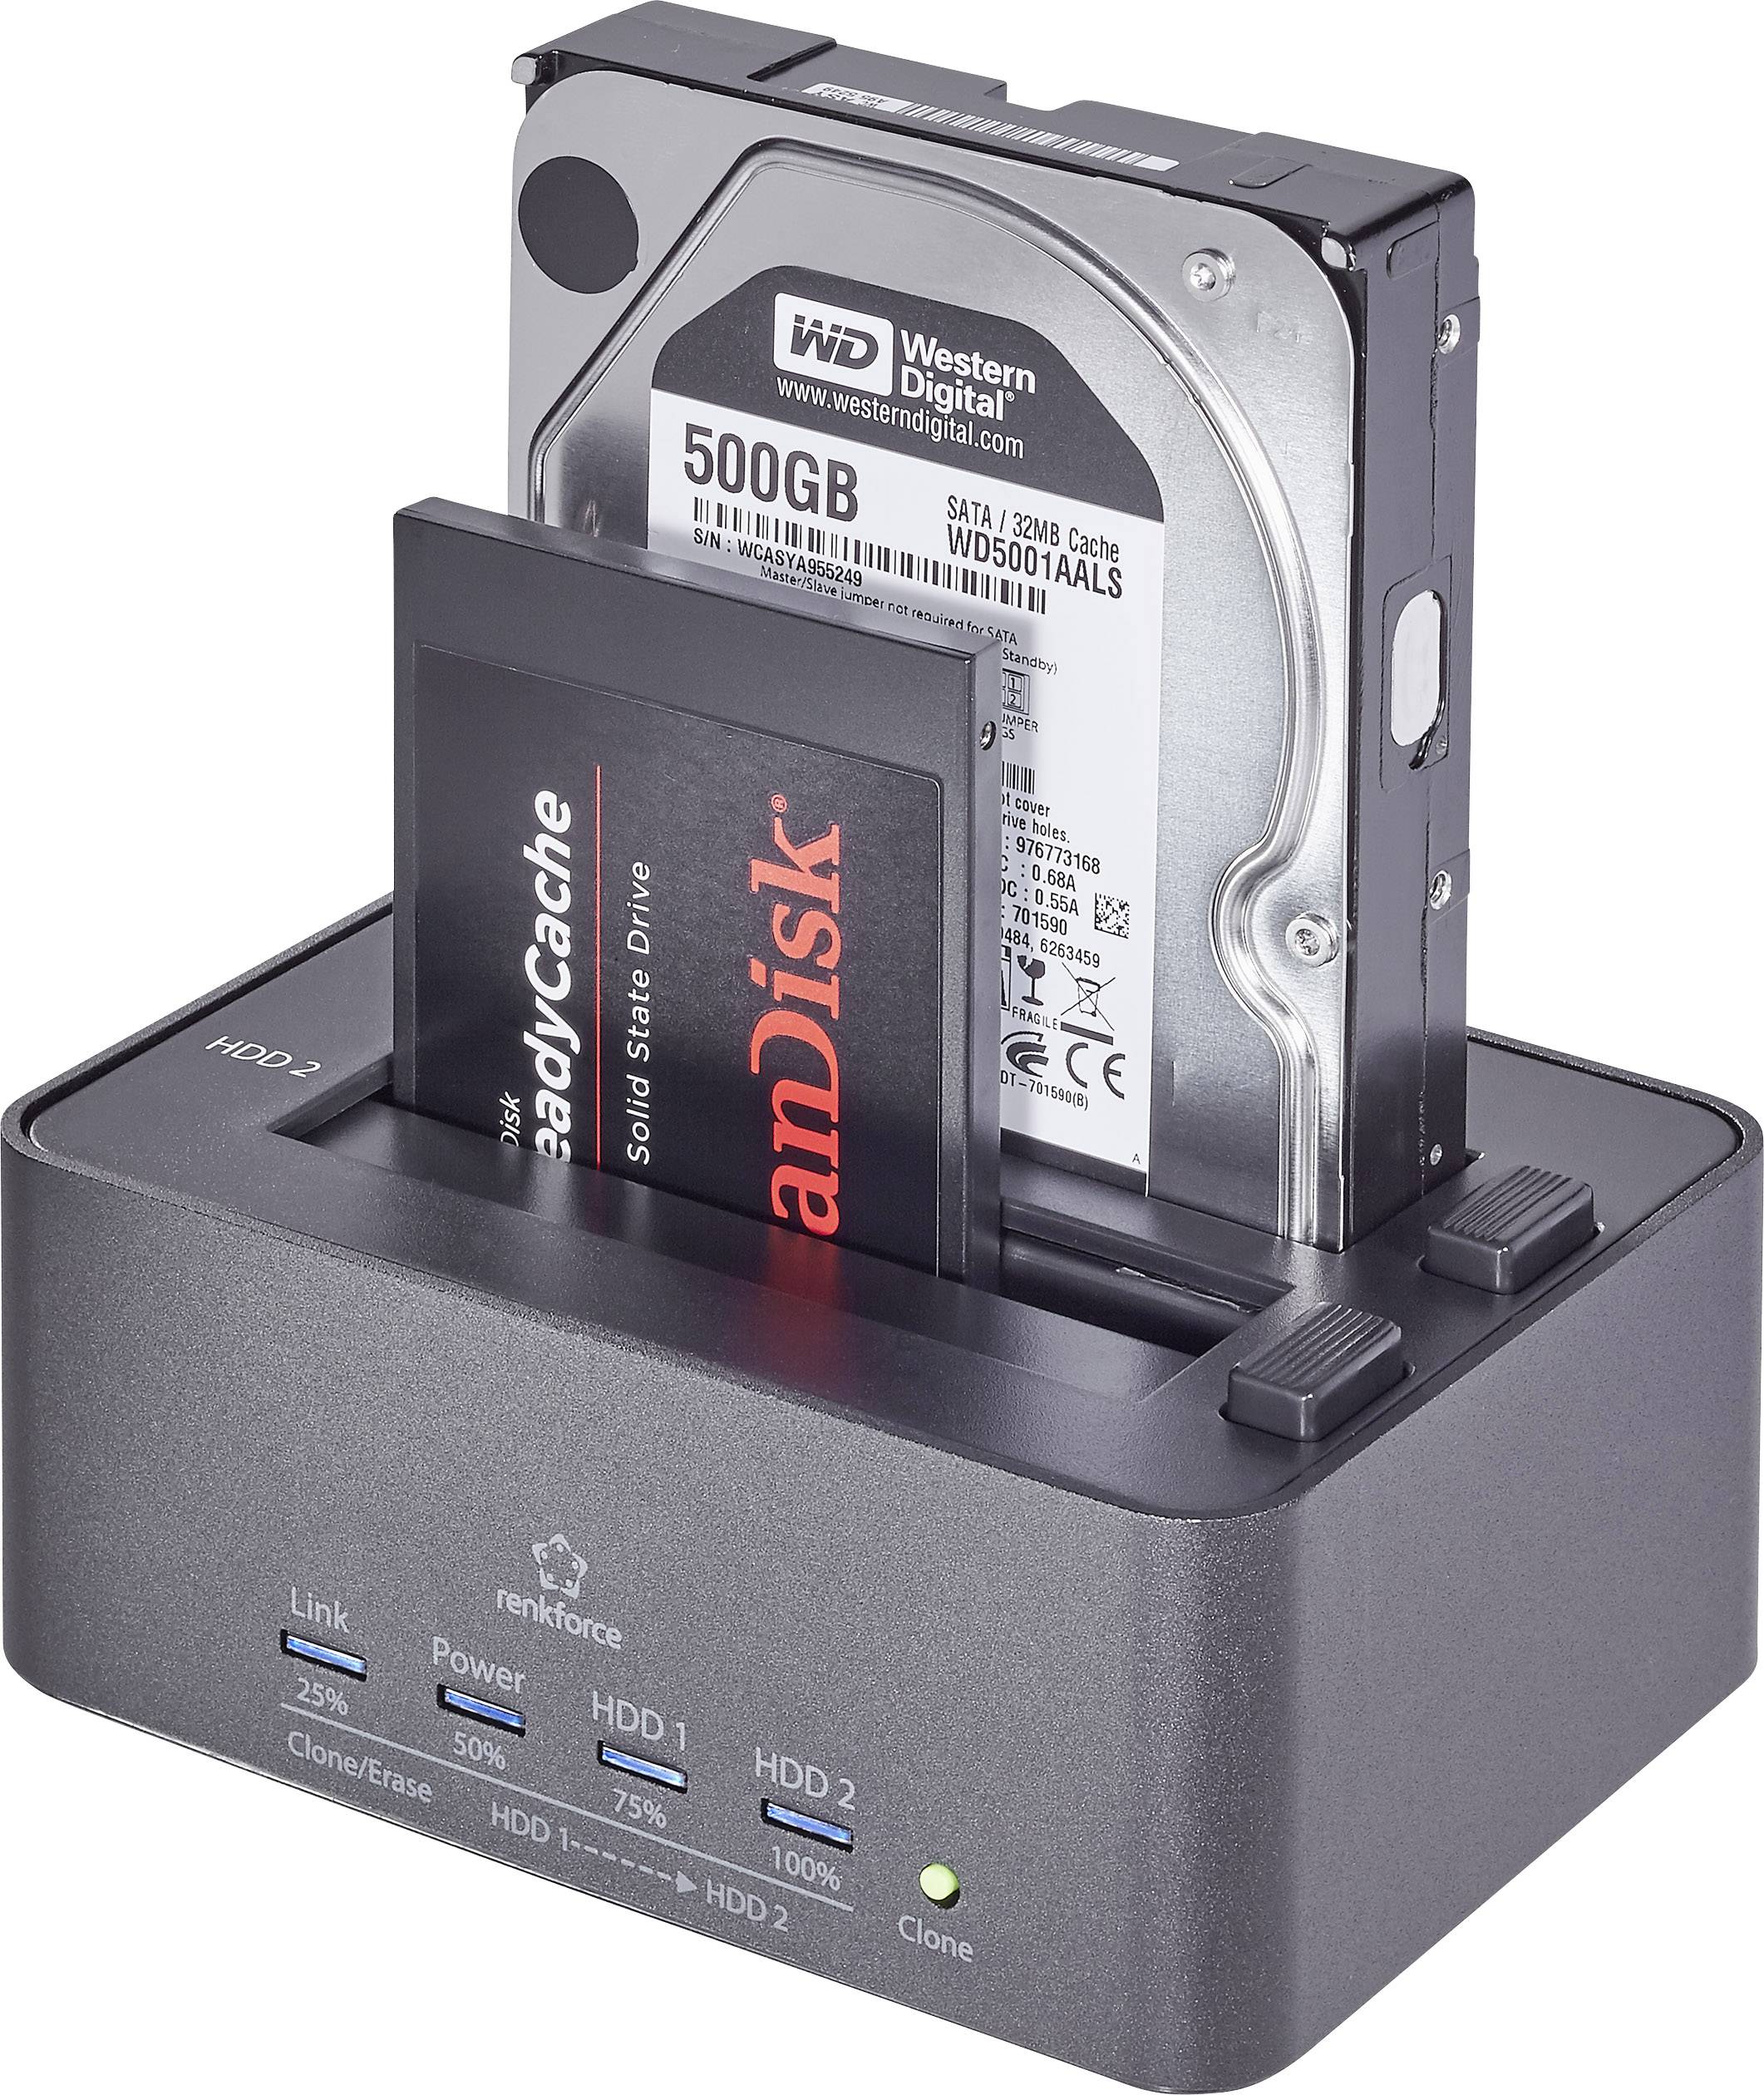 rf-docking-08 USB 3.2 Gen (USB 3.0) SATA 2 ports HDD docking station Clone function, Erase function | Conrad.com